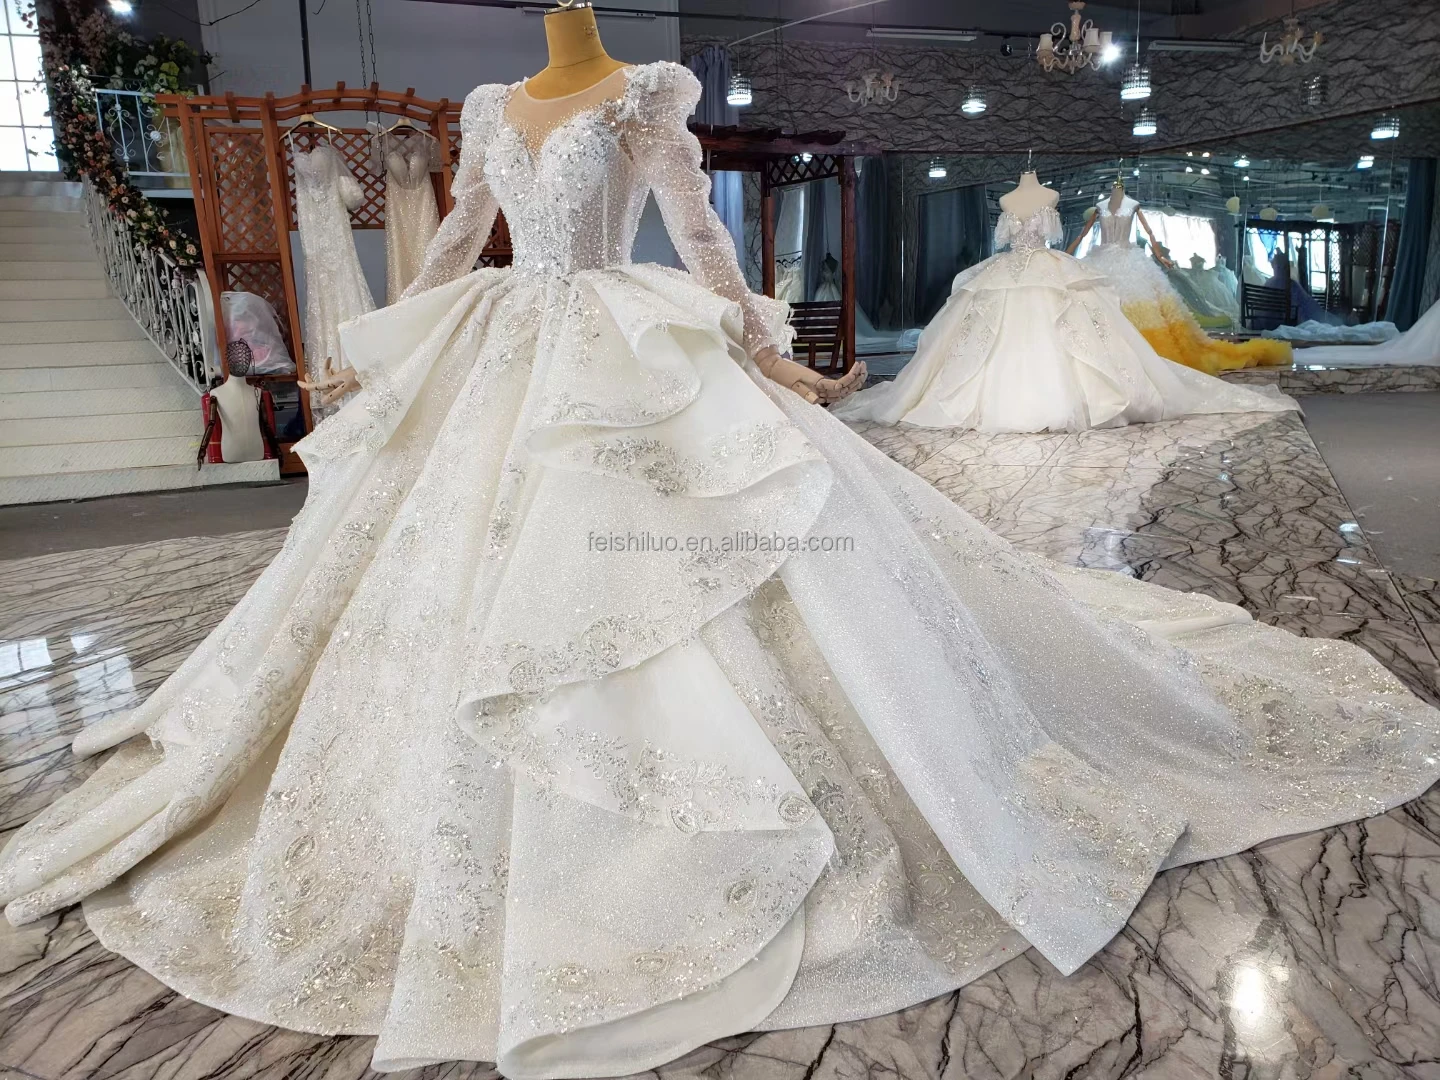 NE264 Plus Size Wedding Dress African| Alibaba.com